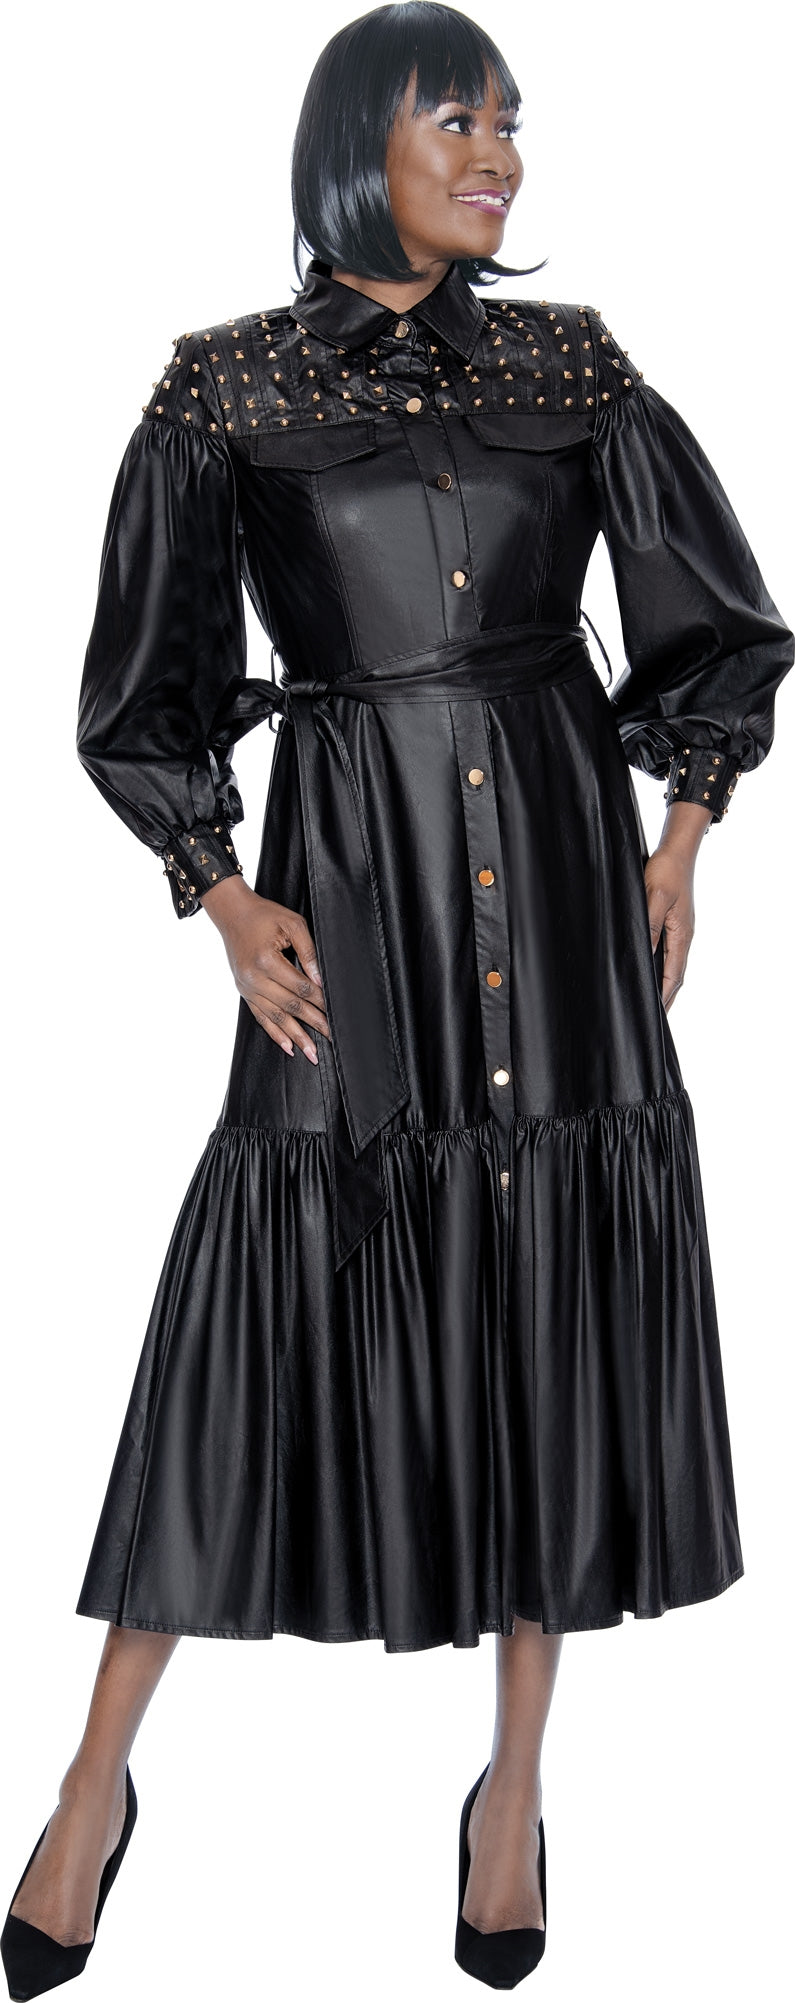 Terramina Dress 7082-Black - Church Suits For Less